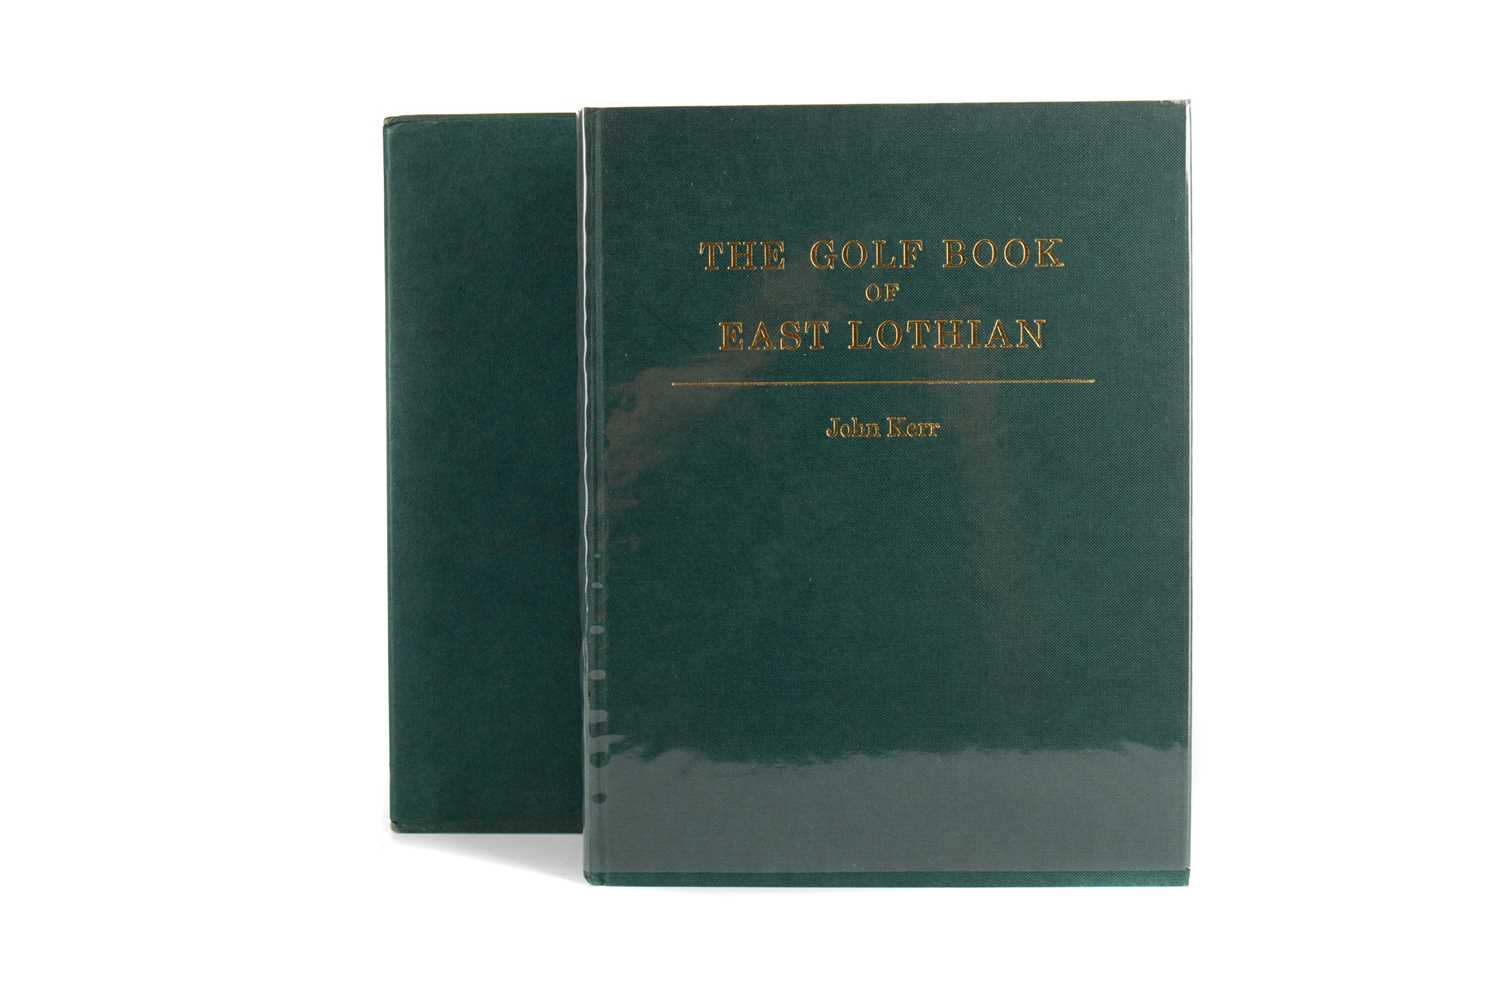 Lot 1715 - THE GOLF BOOK OF EAST LOTHIAN BY JOHN KERR